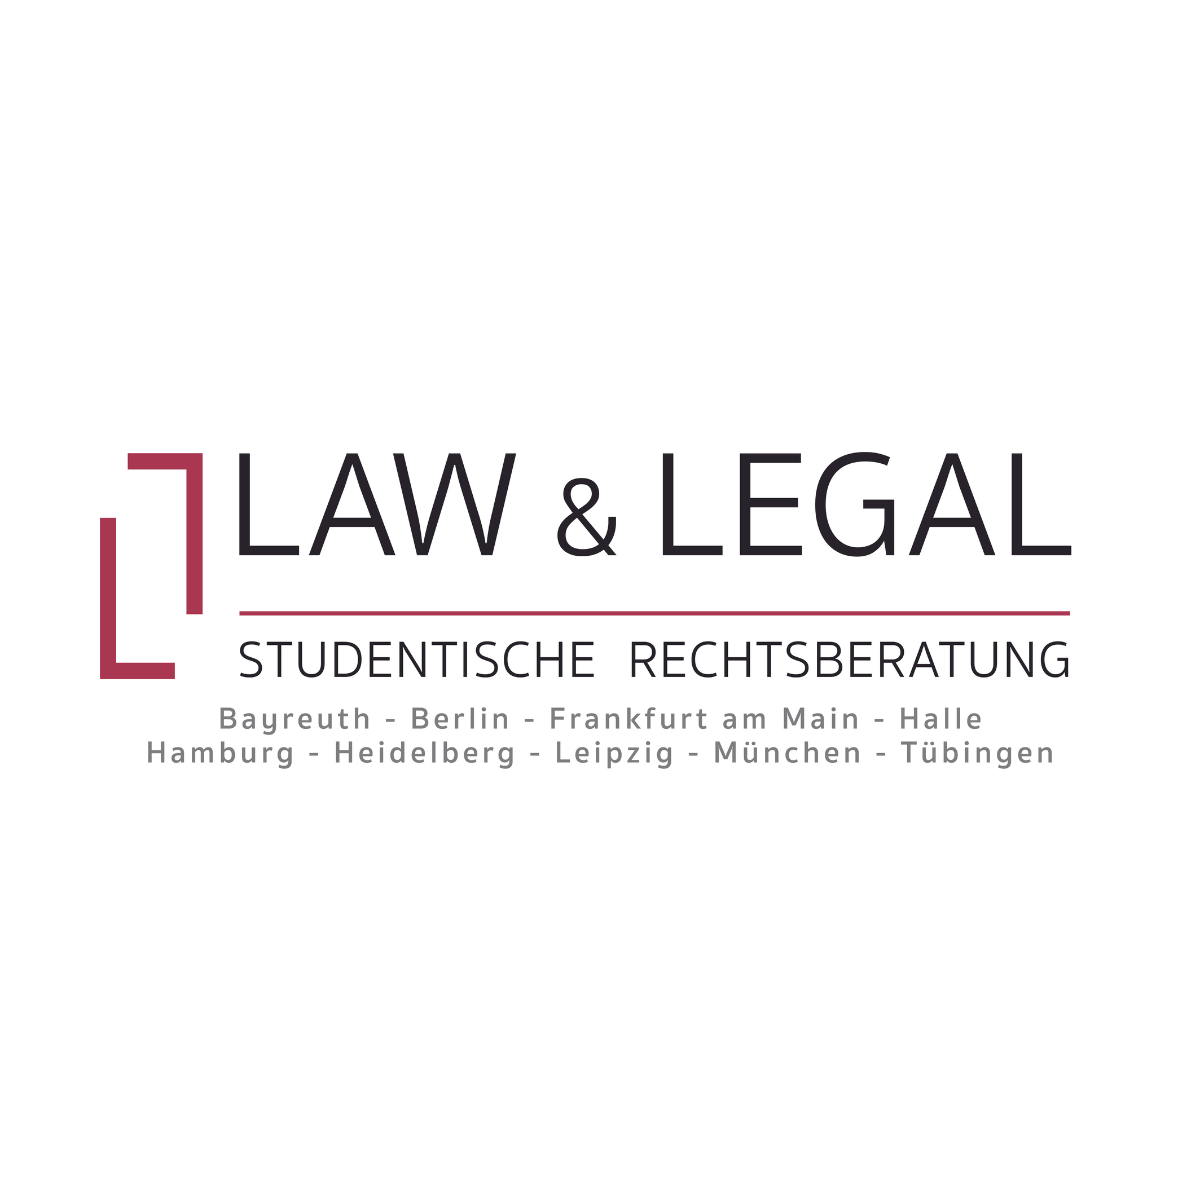 Law & Legal - Studentische Rechtsberatung e. V.